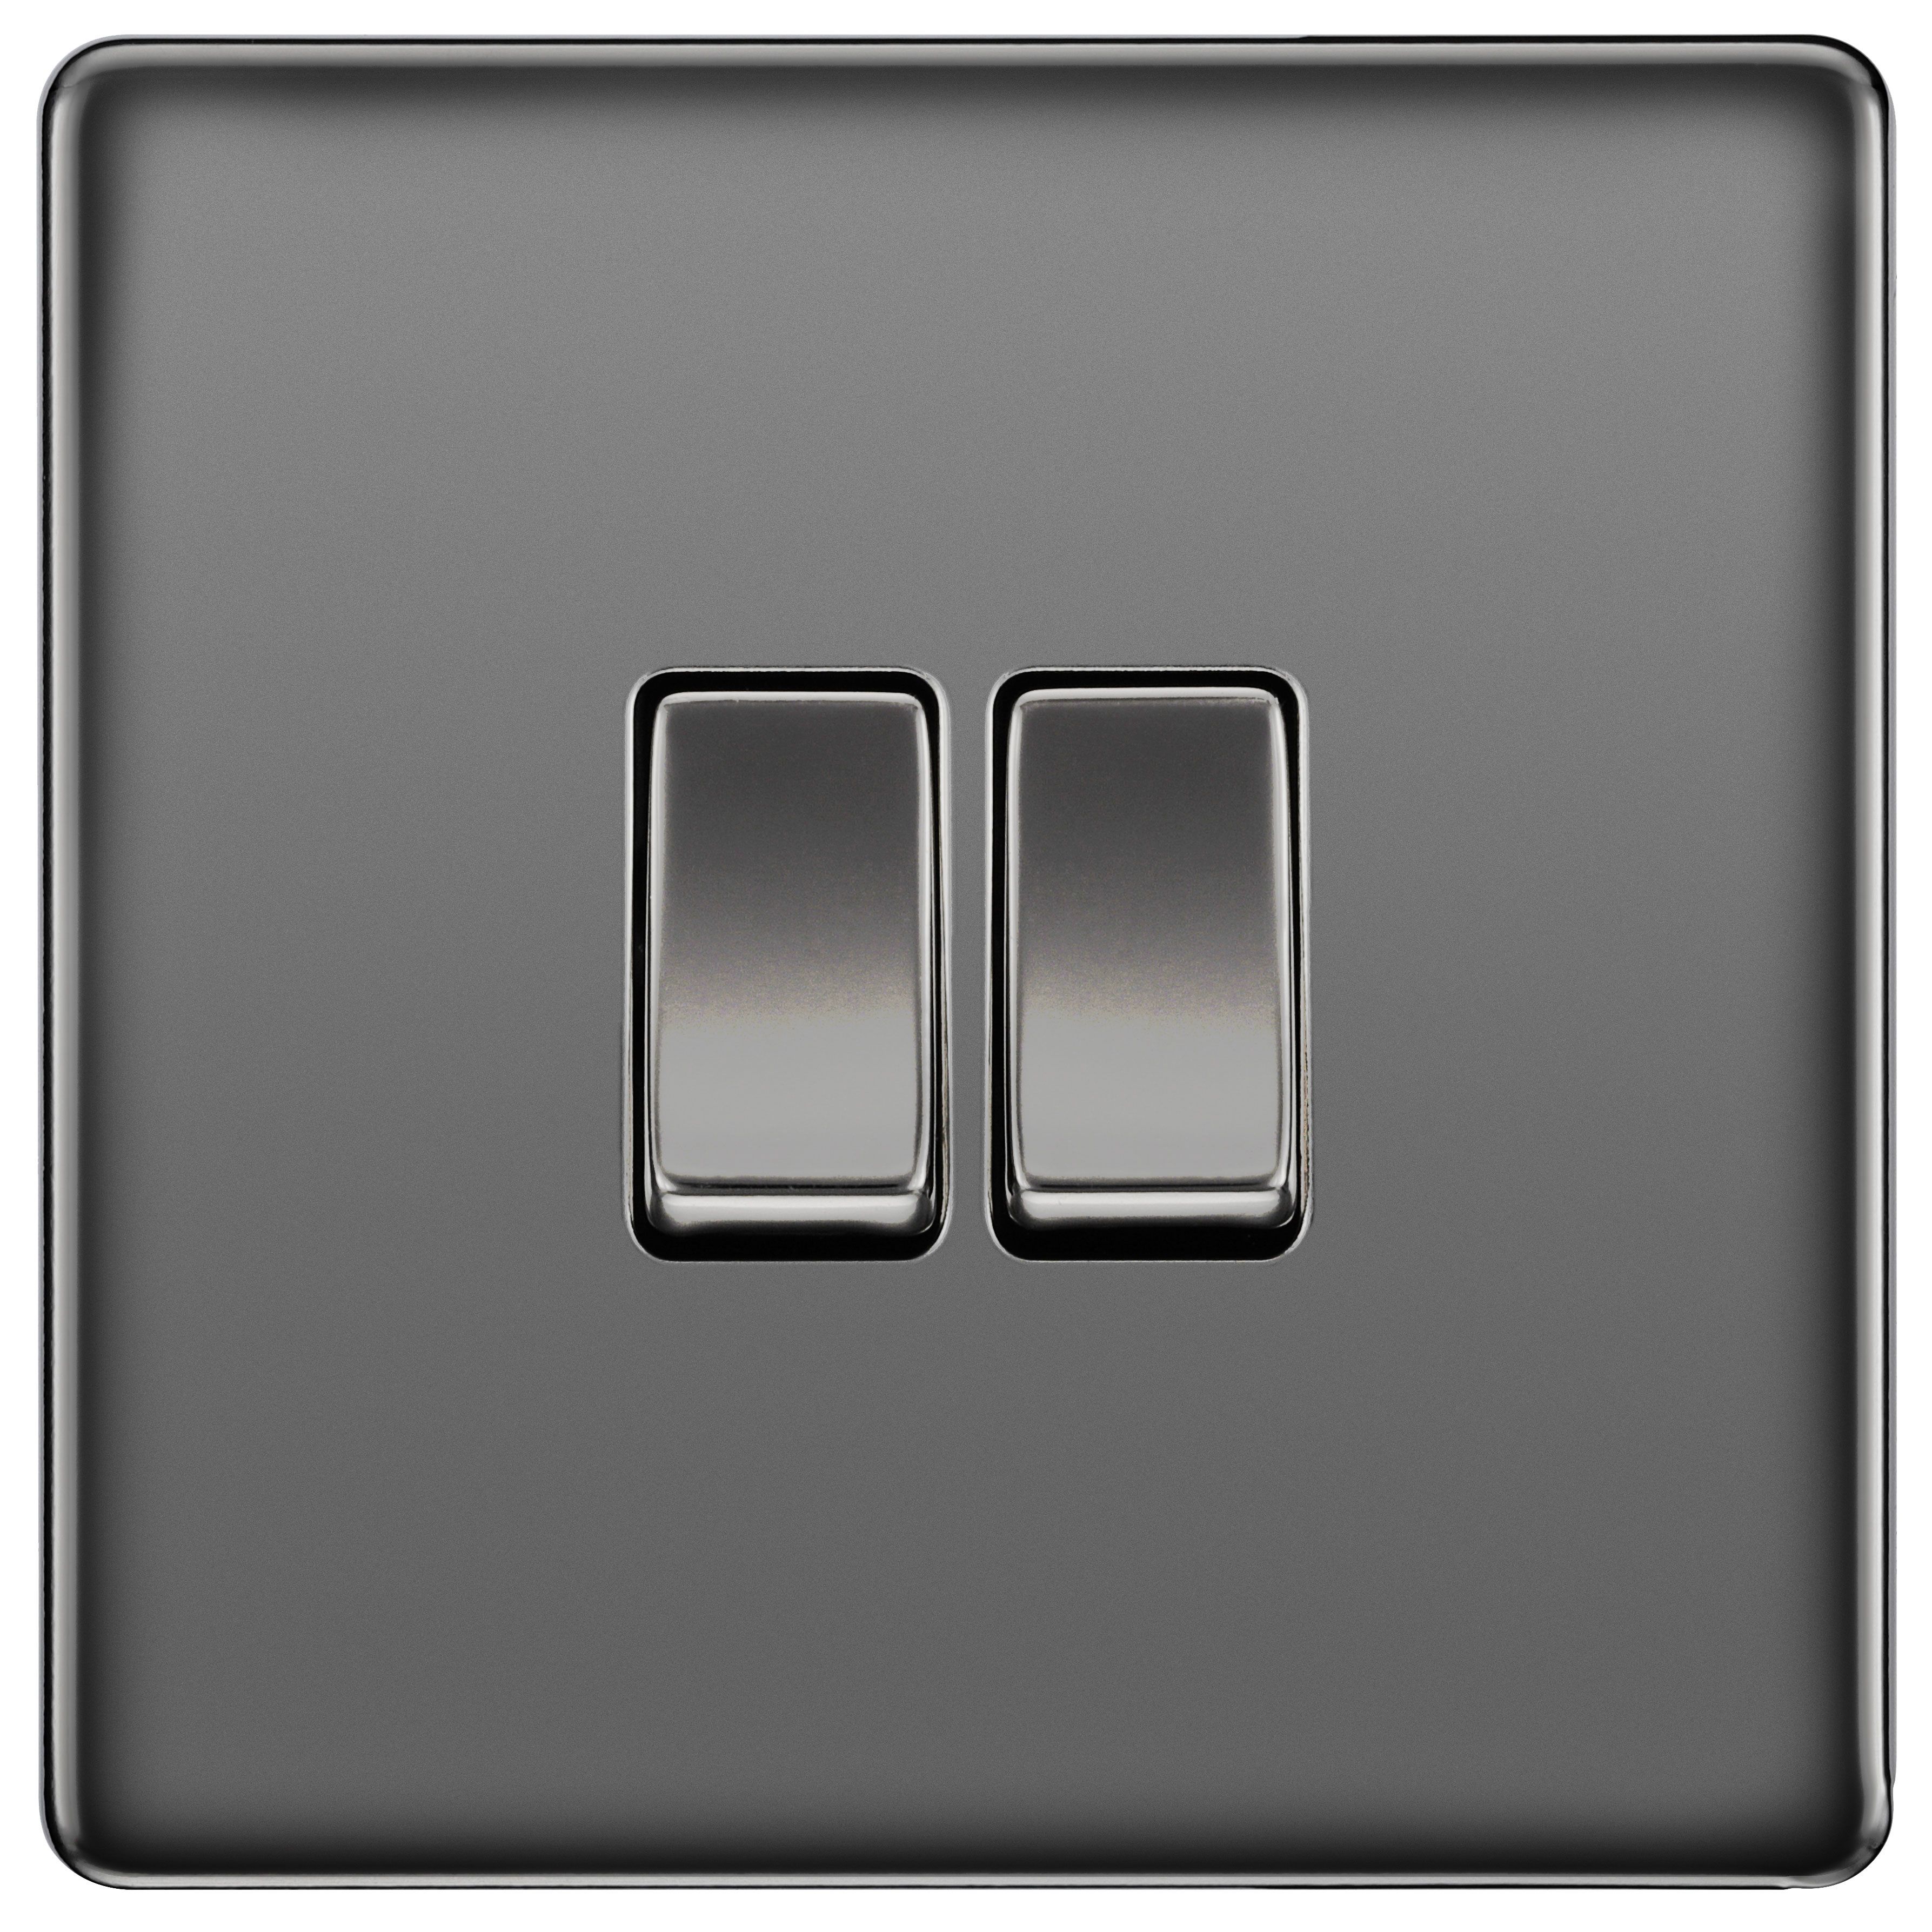 BG 10Ax Screwless Flat Plate Double Switch 2 Way - Black Nickel